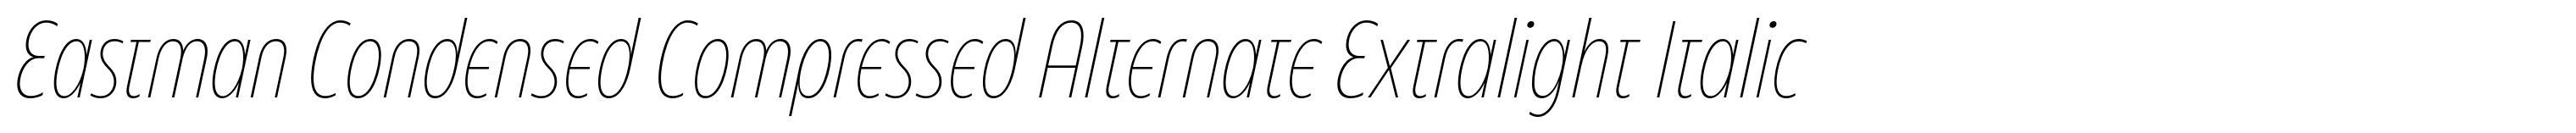 Eastman Condensed Compressed Alternate Extralight Italic